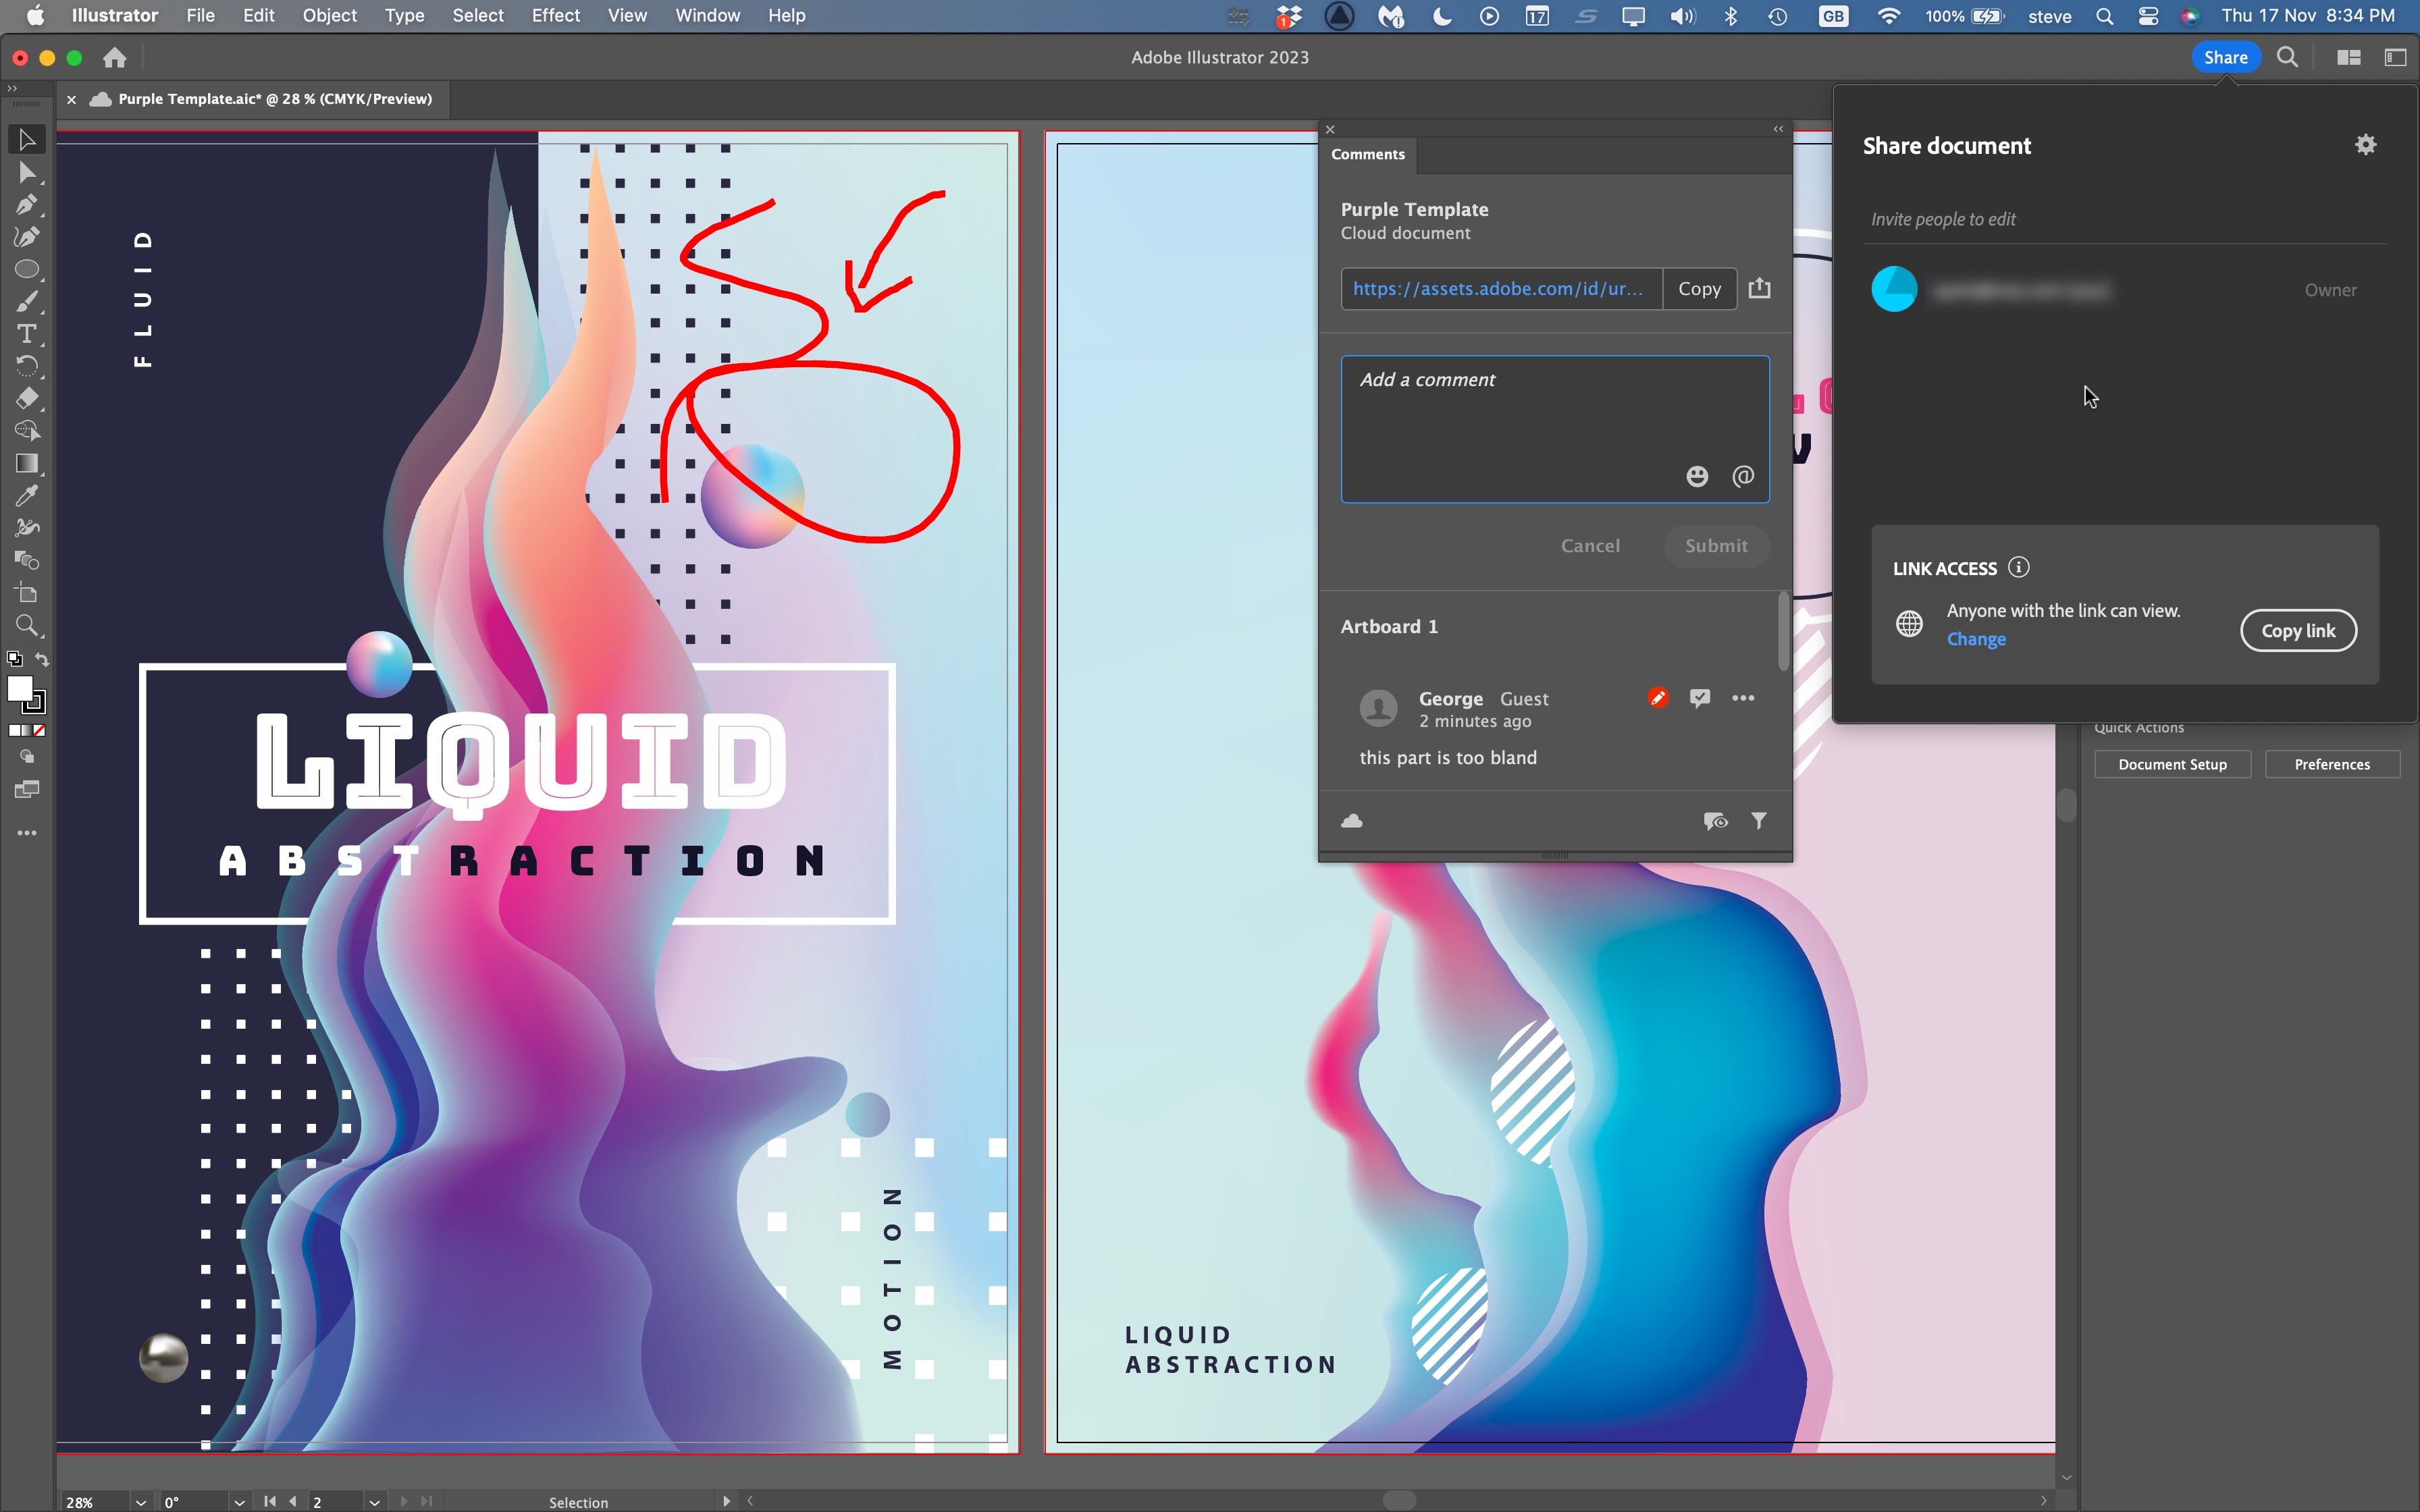 Adobe Illustrator graphic design software in action